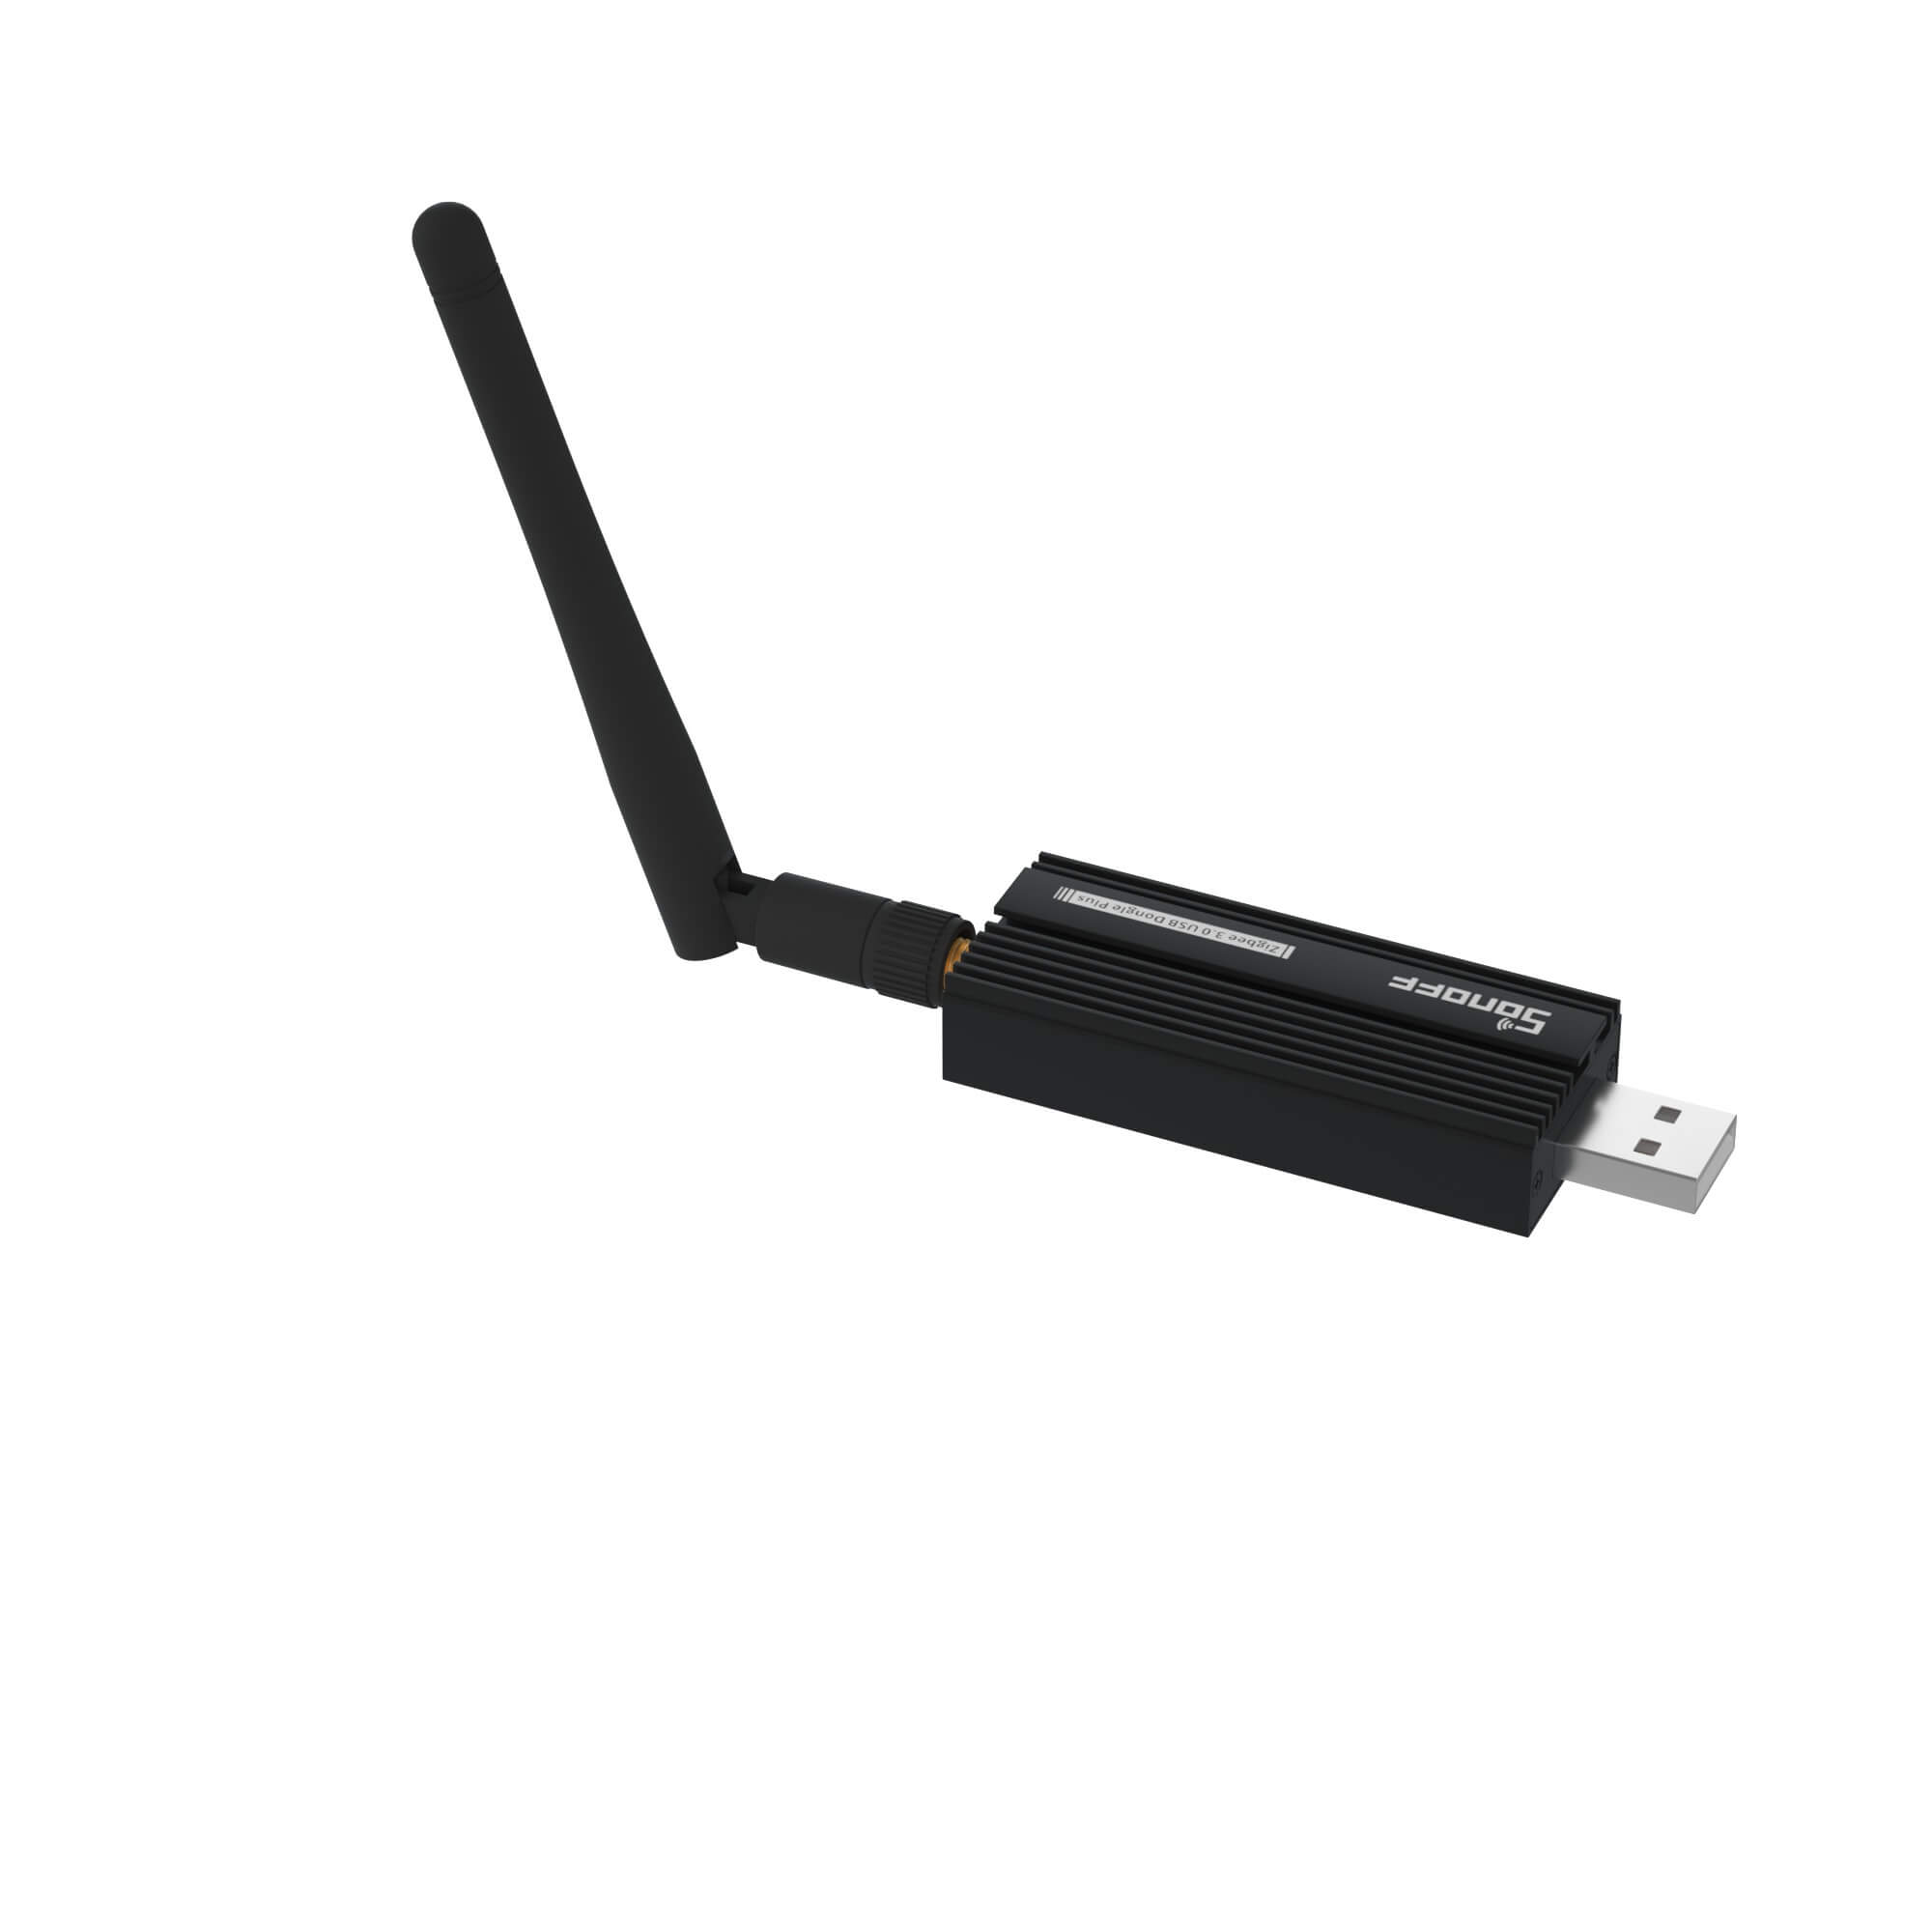 SONOFF Zigbee 3.0 USB Dongle Plus Gateway, Universal Zigbee with Antenna  for Home Assistant, Open HAB etc, Wireless Zigbee 3.0 USB Adapter(1 Pack) 